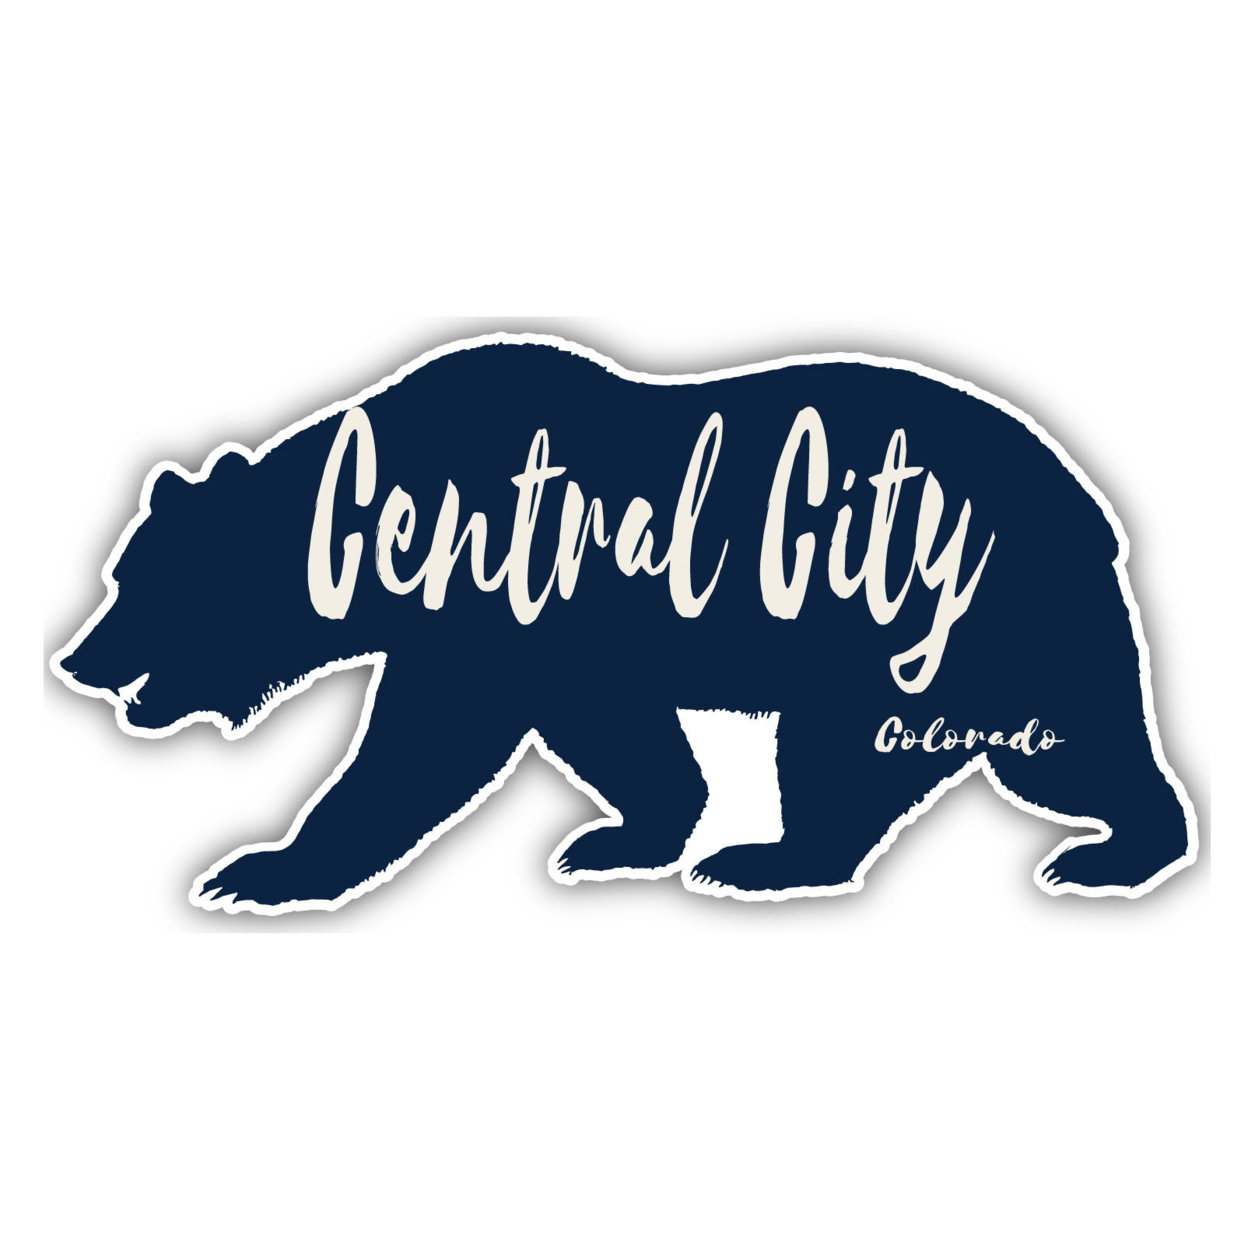 Central City Colorado Souvenir Decorative Stickers (Choose Theme And Size) - Single Unit, 12-Inch, Tent